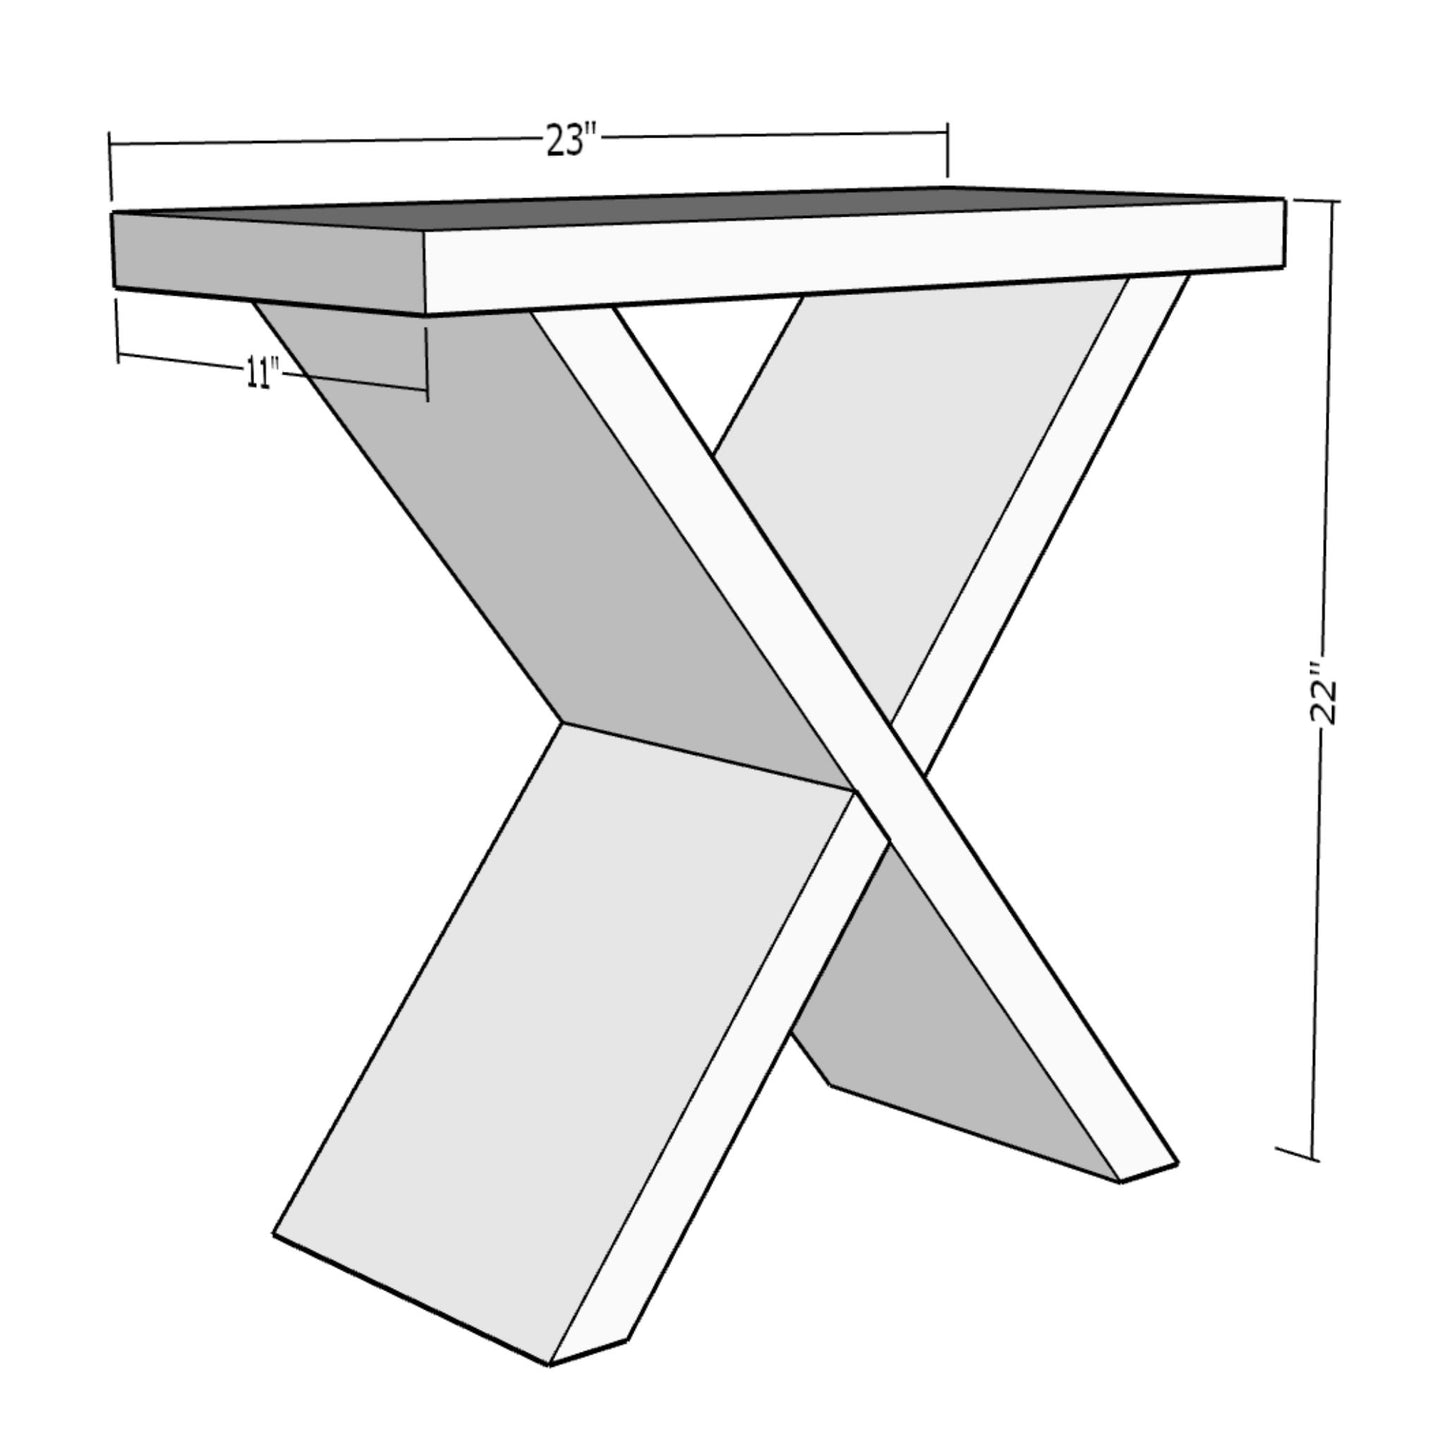 X-Side Table Printable Plans